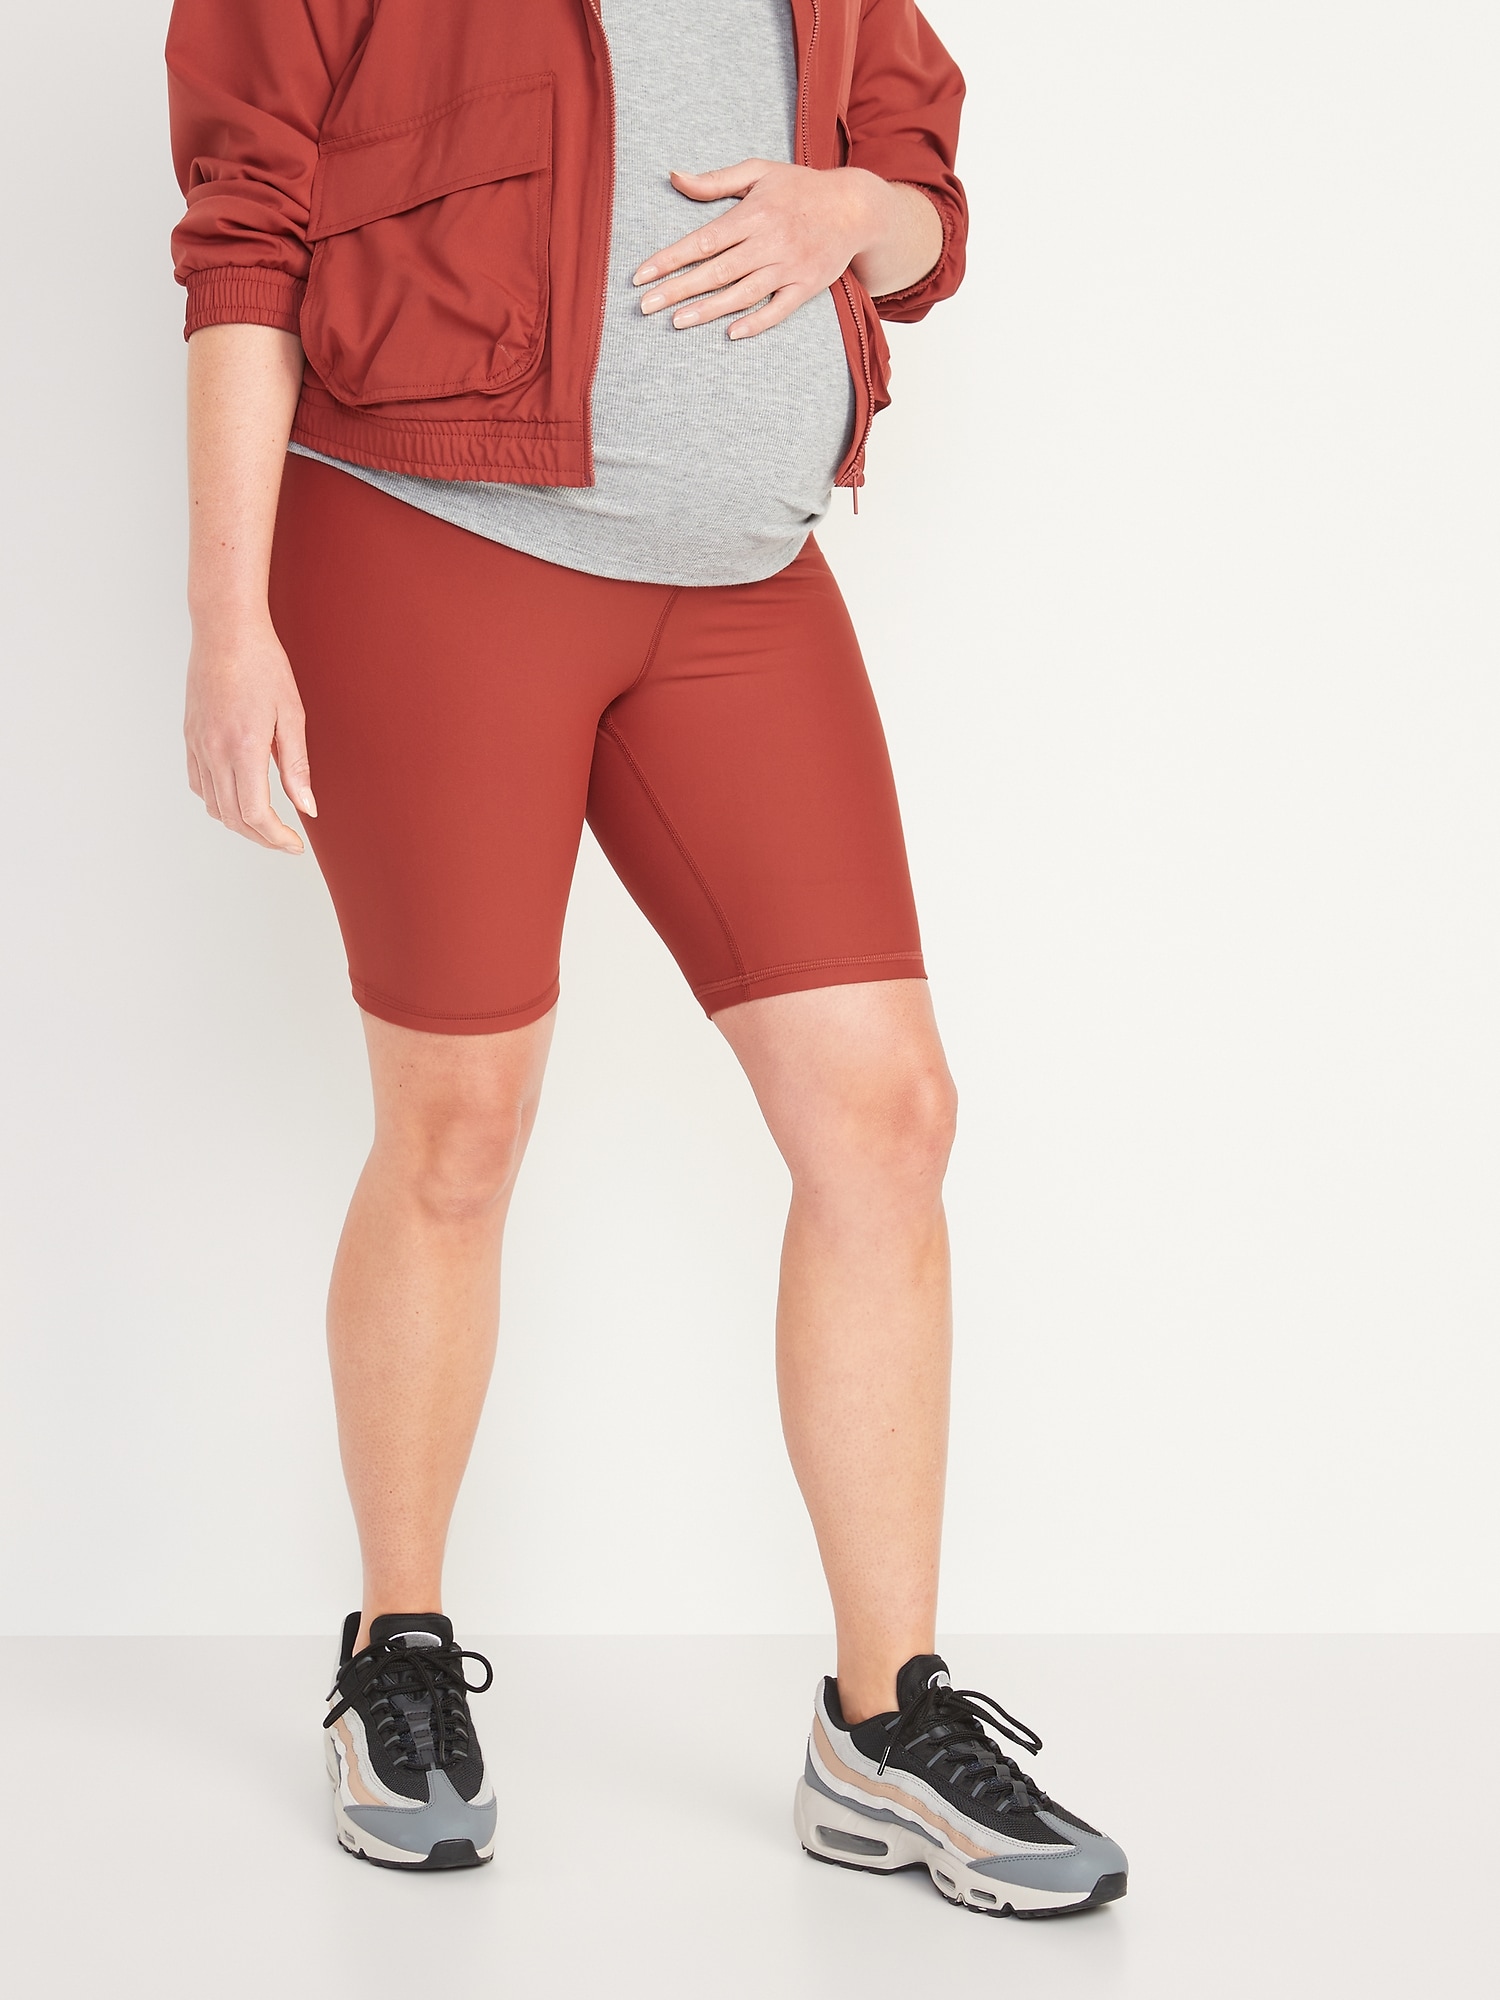 Queen Bee - Ellyse Maternity Active Bike Shorts in Black